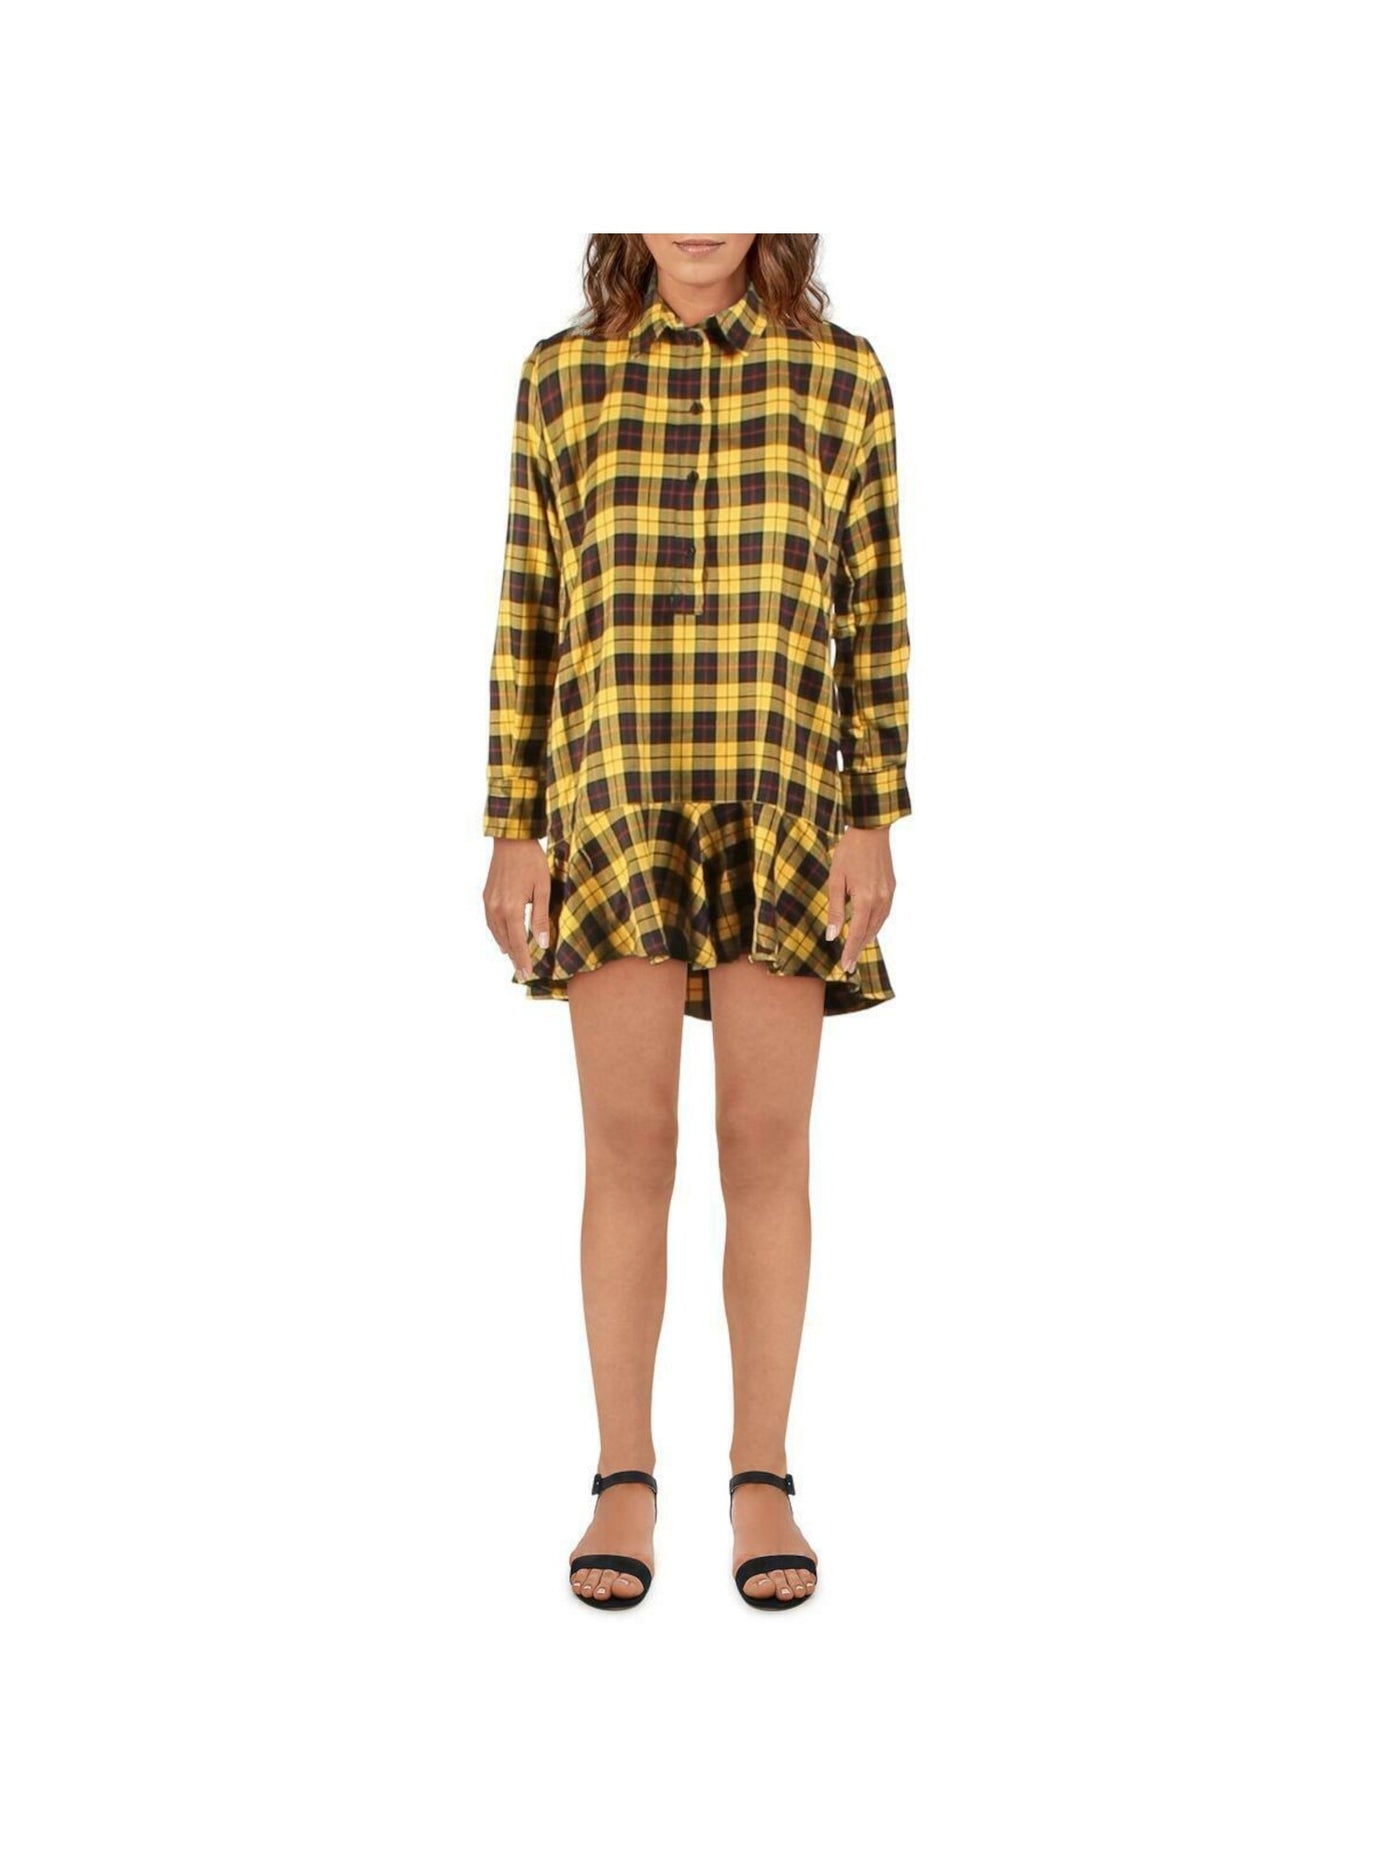 AQUA Womens Yellow Flannel Long Sleeve Collared Short Shirt Dress Size: M